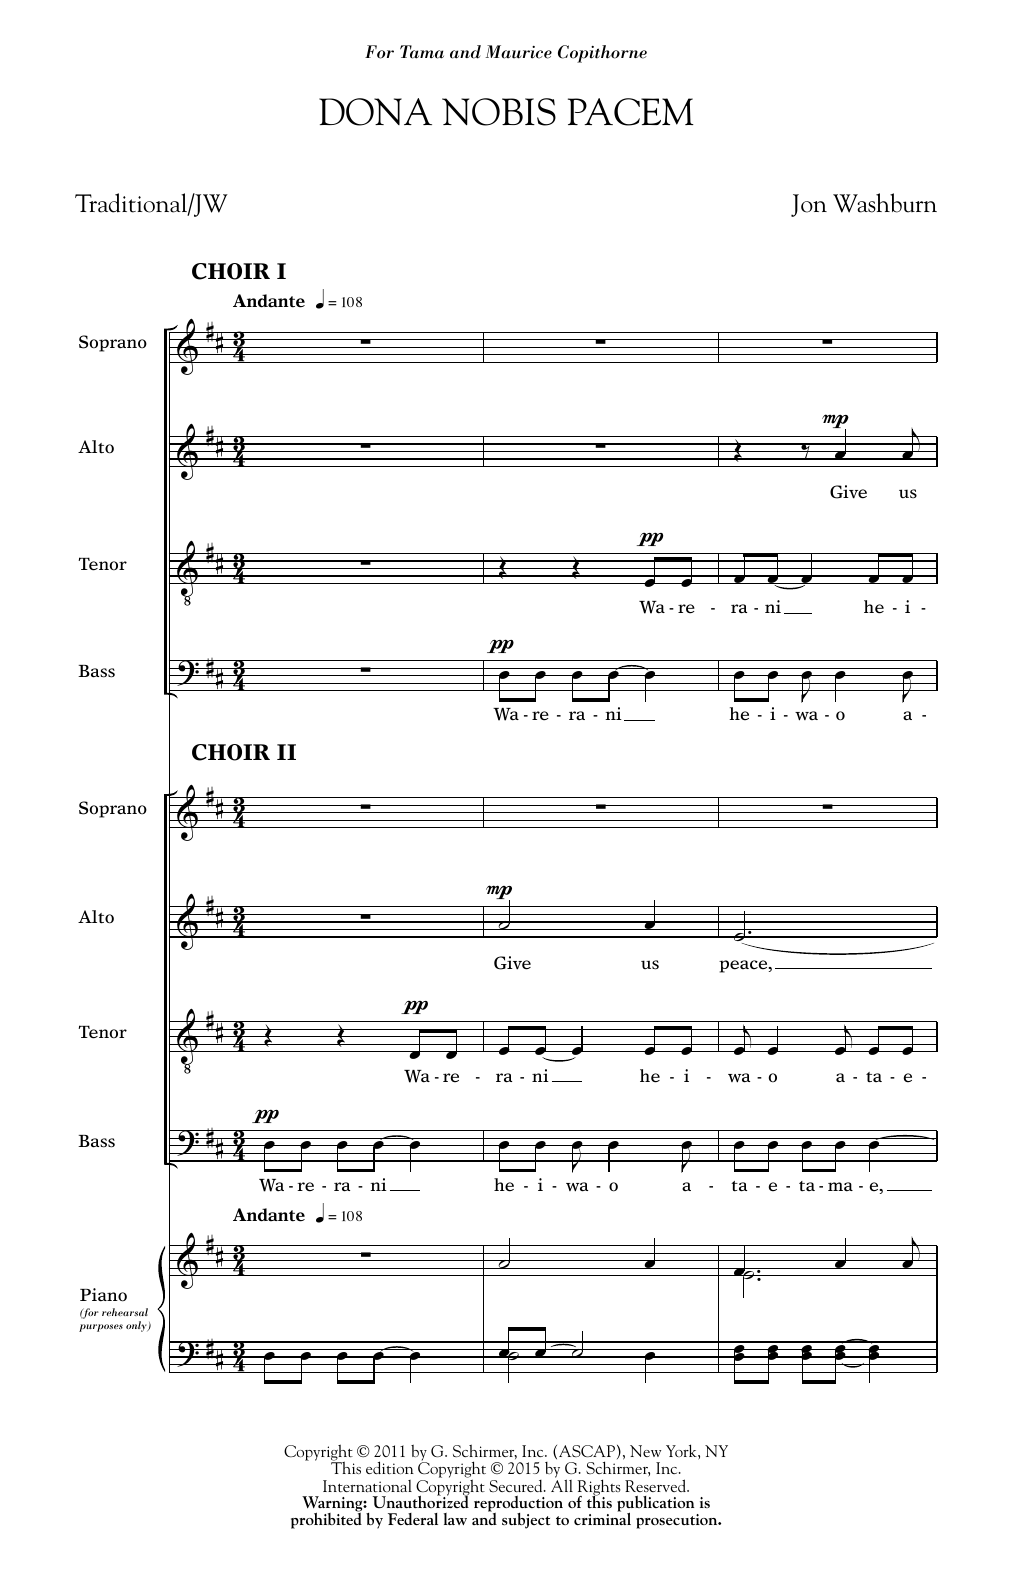 Jon Washburn Dona Nobis Pacem sheet music notes and chords arranged for SATB Choir